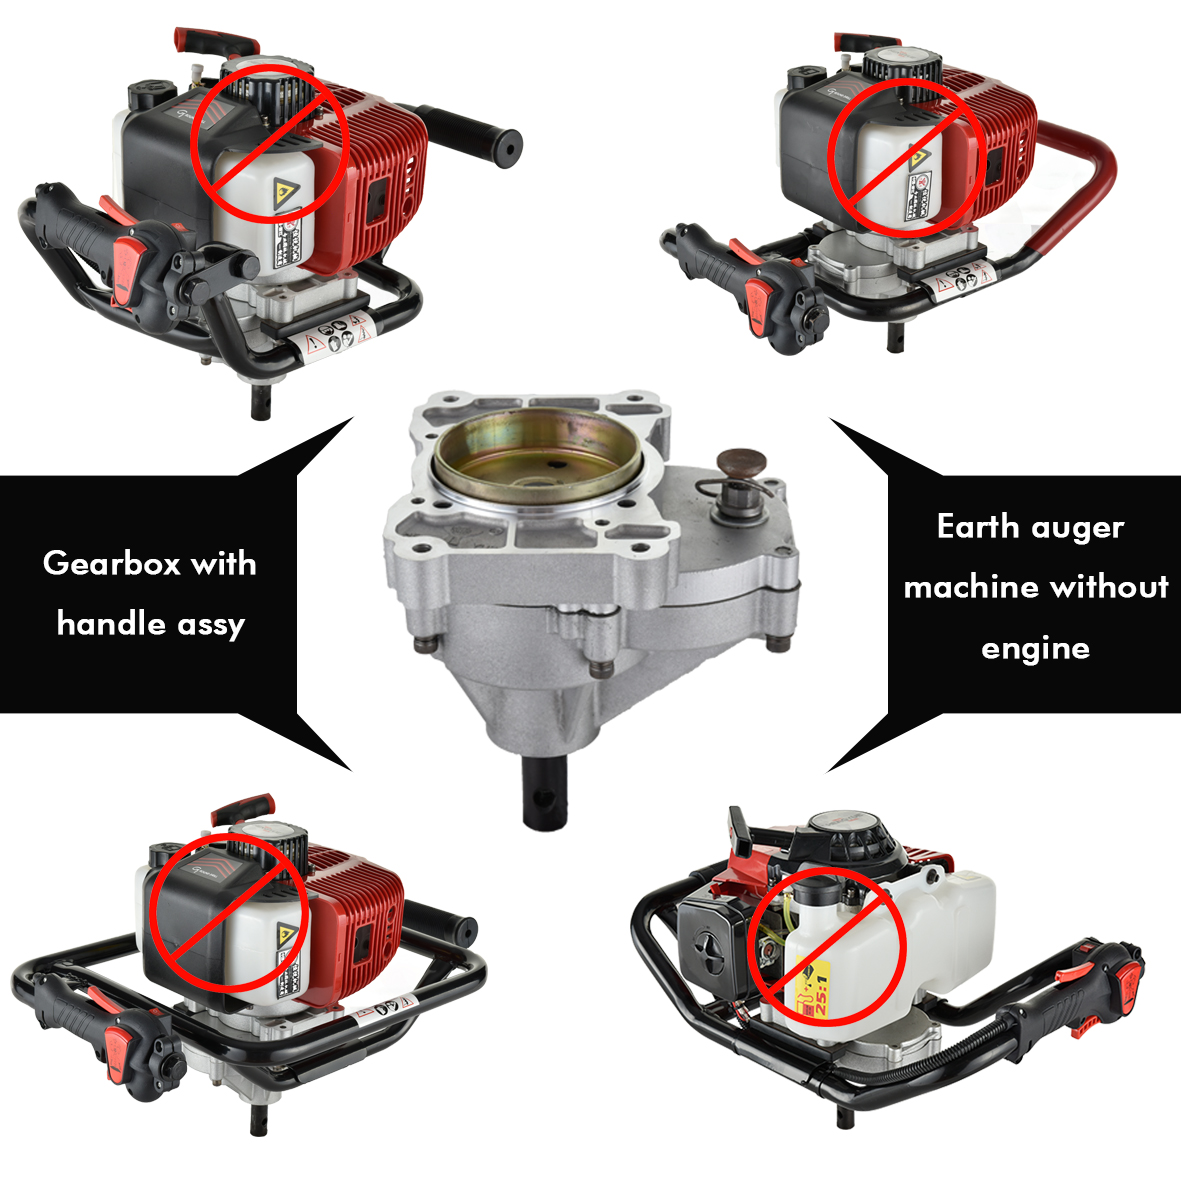 Manu-manong reverse gear box para sa maliit na gasoline engine power earth auger machine